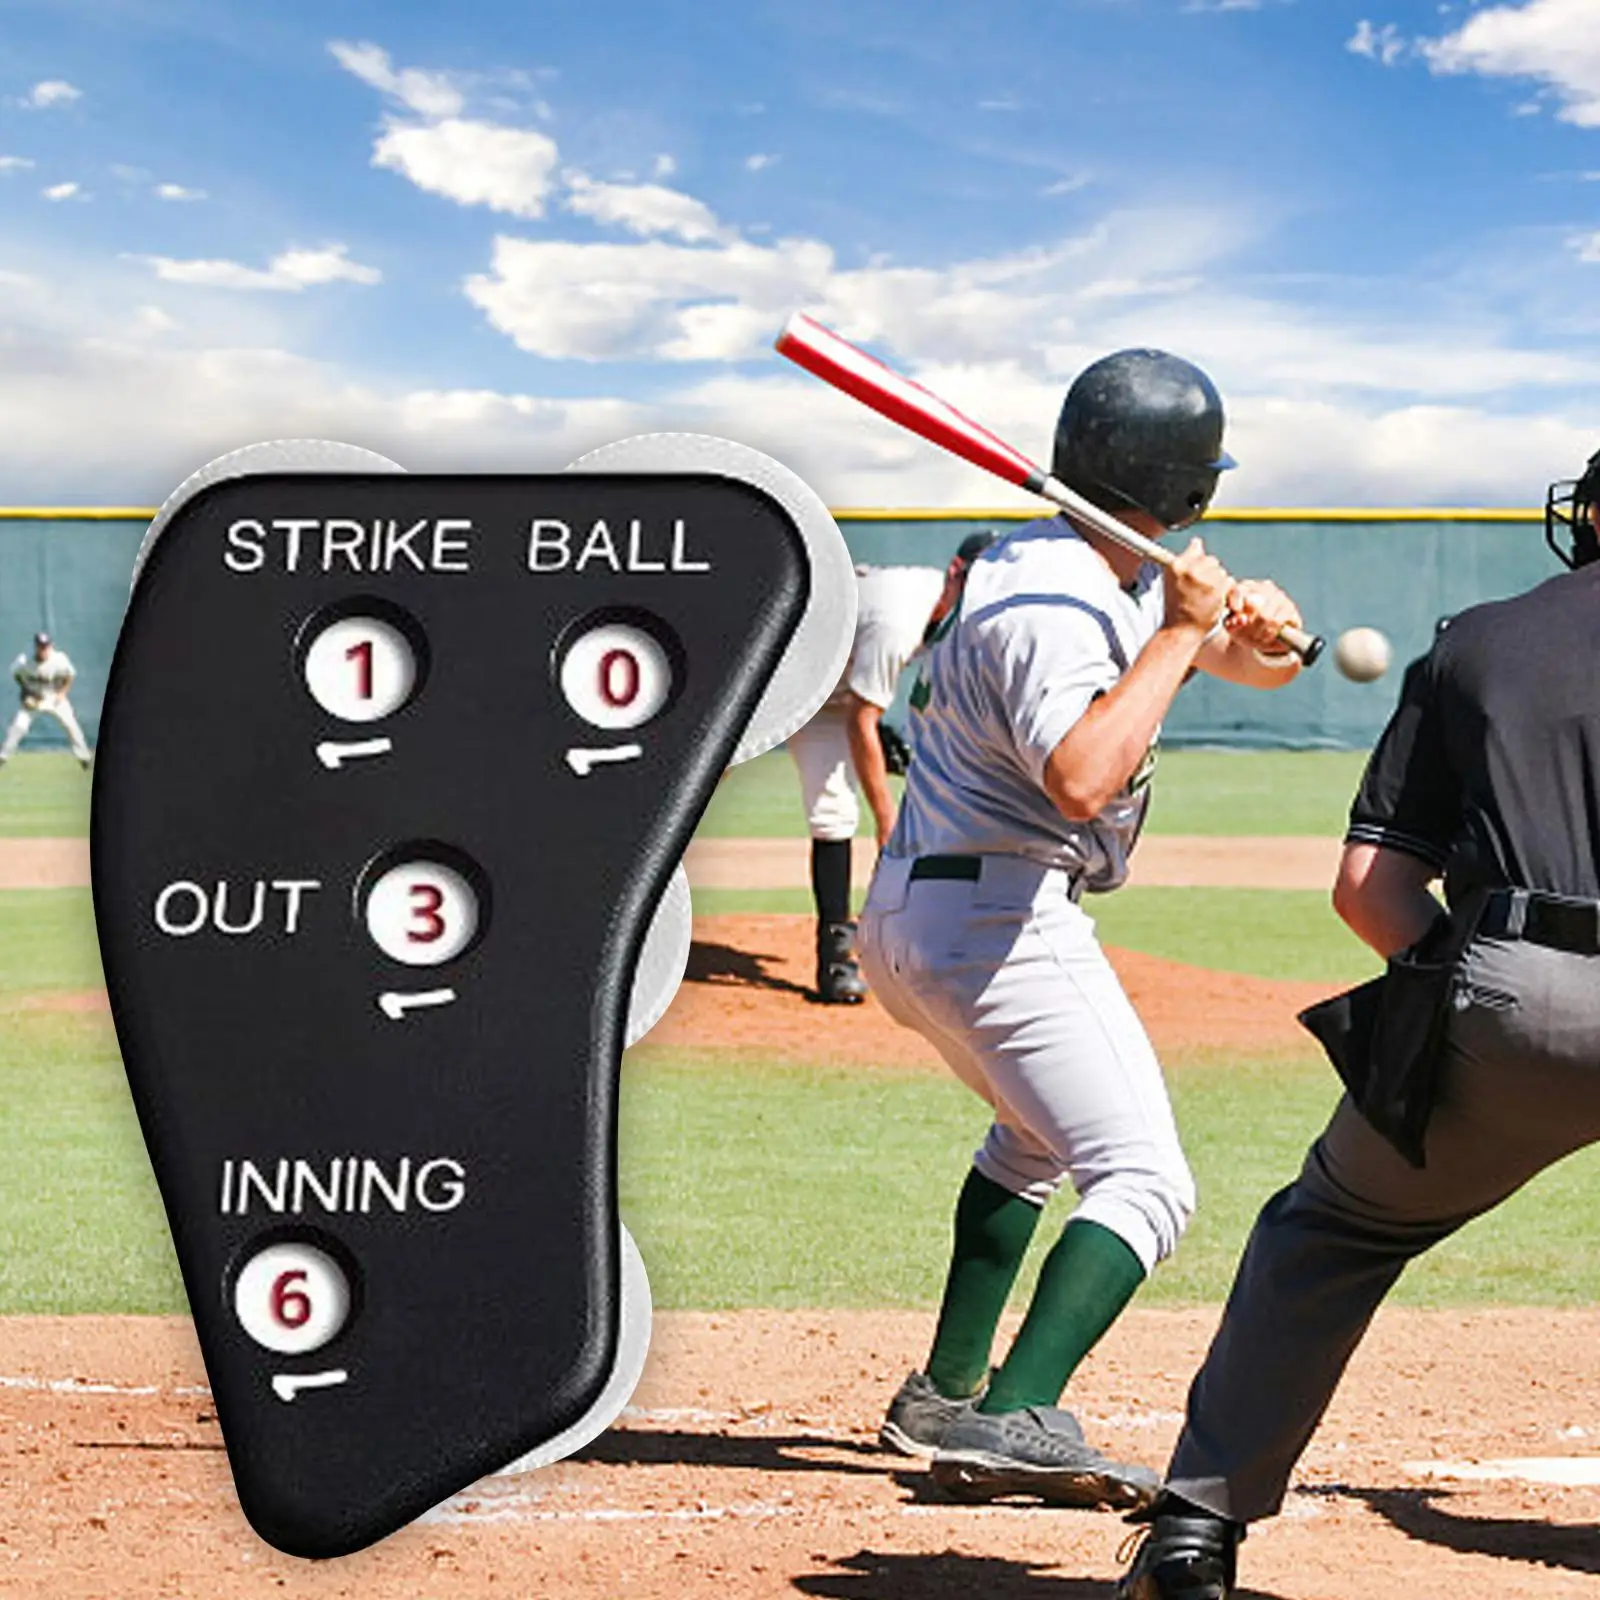 Baseball Umpire , Baseball Umpire Equipment 8cmx6cm Score Counter Black Softball Umpire Gear Indicator for Ball Strike Pocket